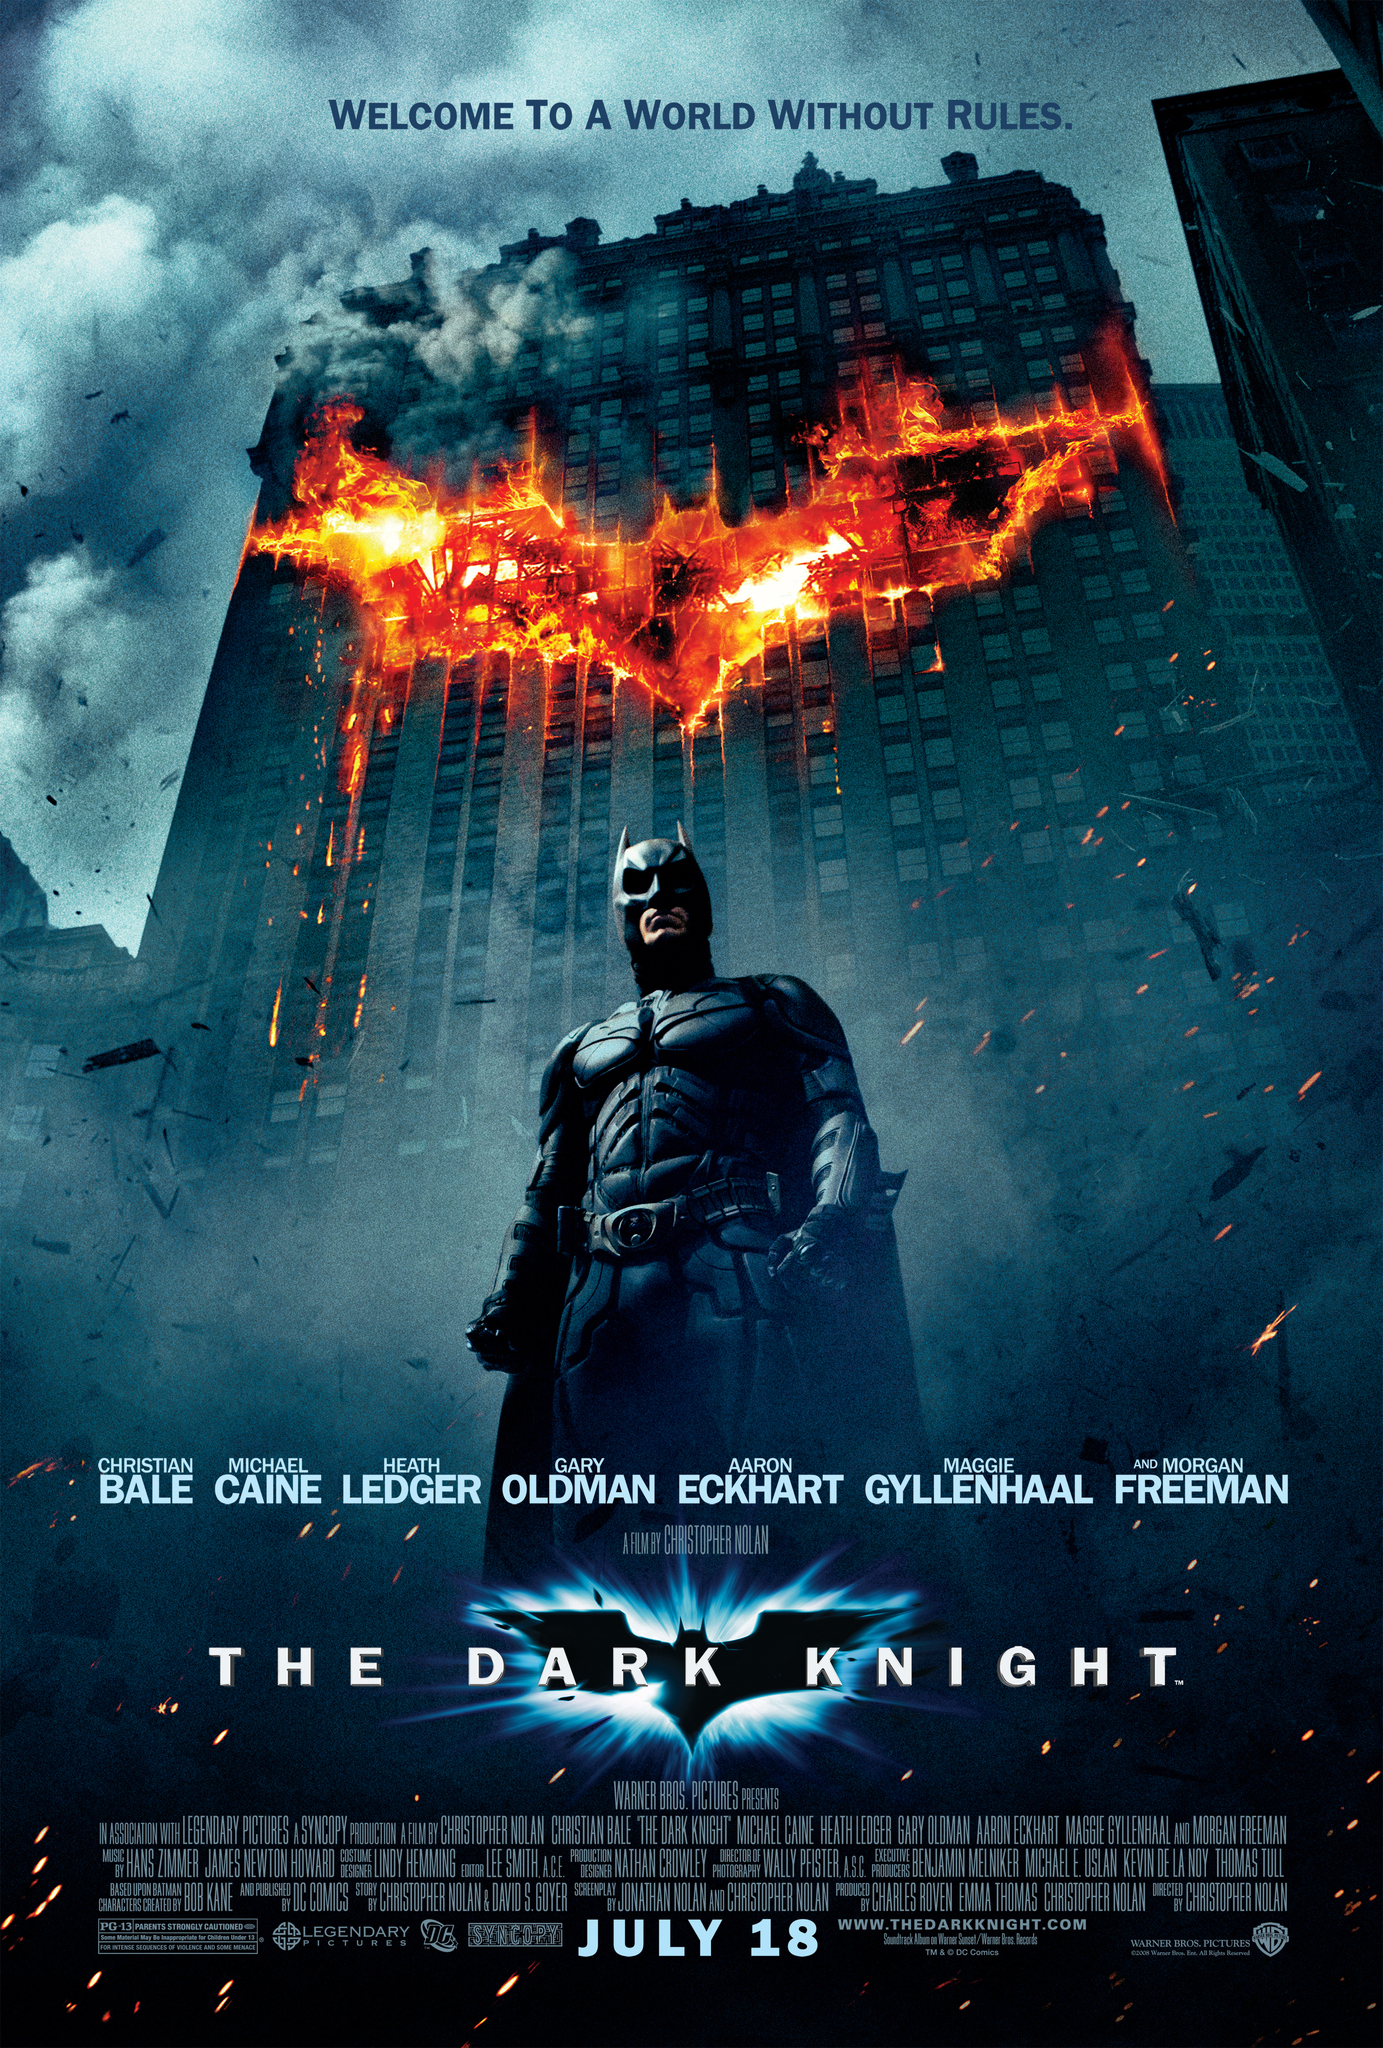 The Dark Knight- DC comics movies in order